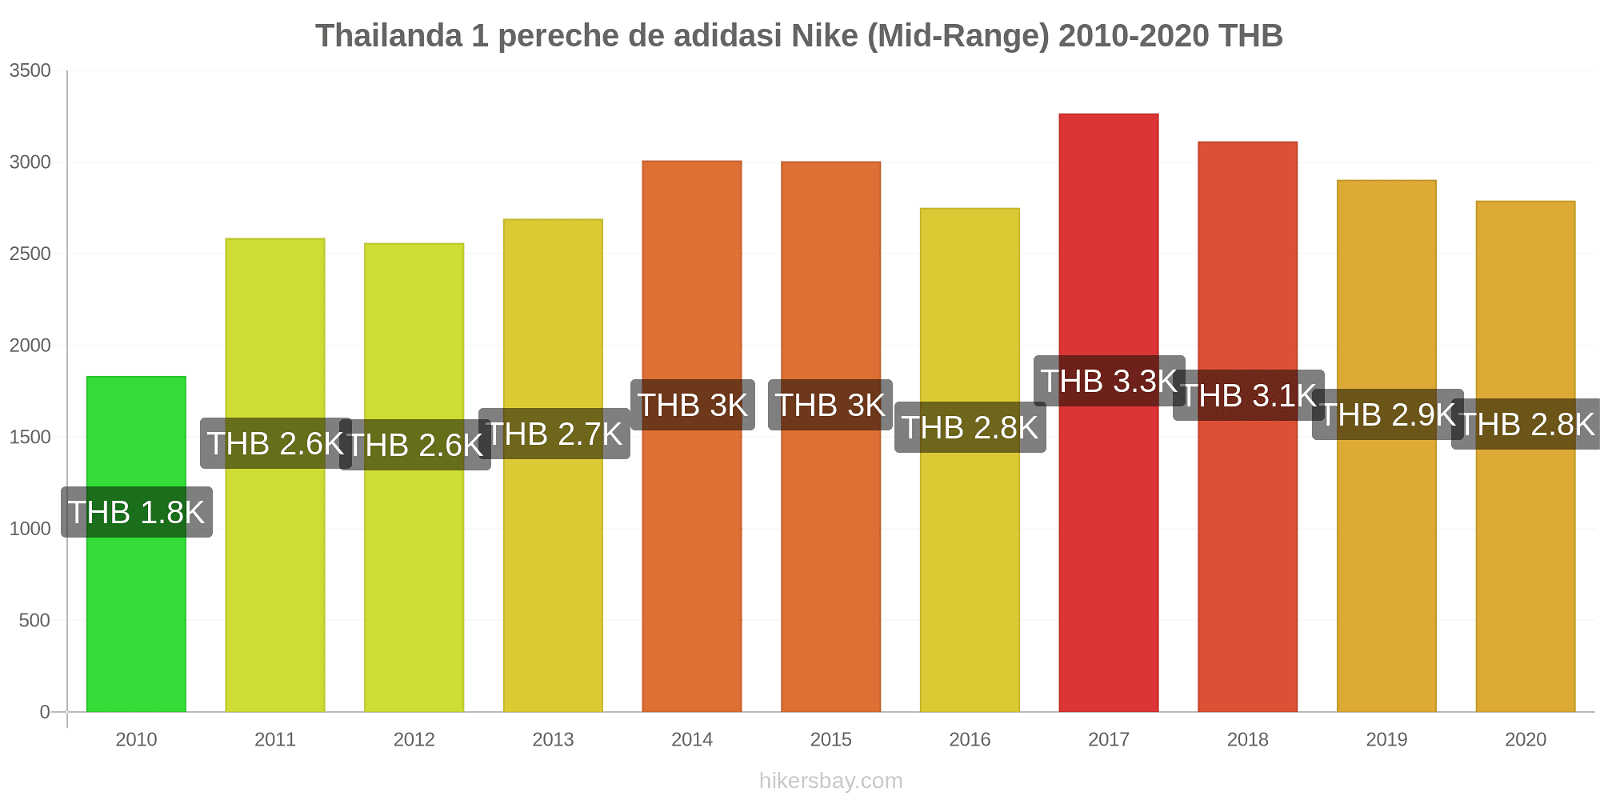 Thailanda modificări de preț 1 pereche de adidasi Nike (Mid-Range) hikersbay.com